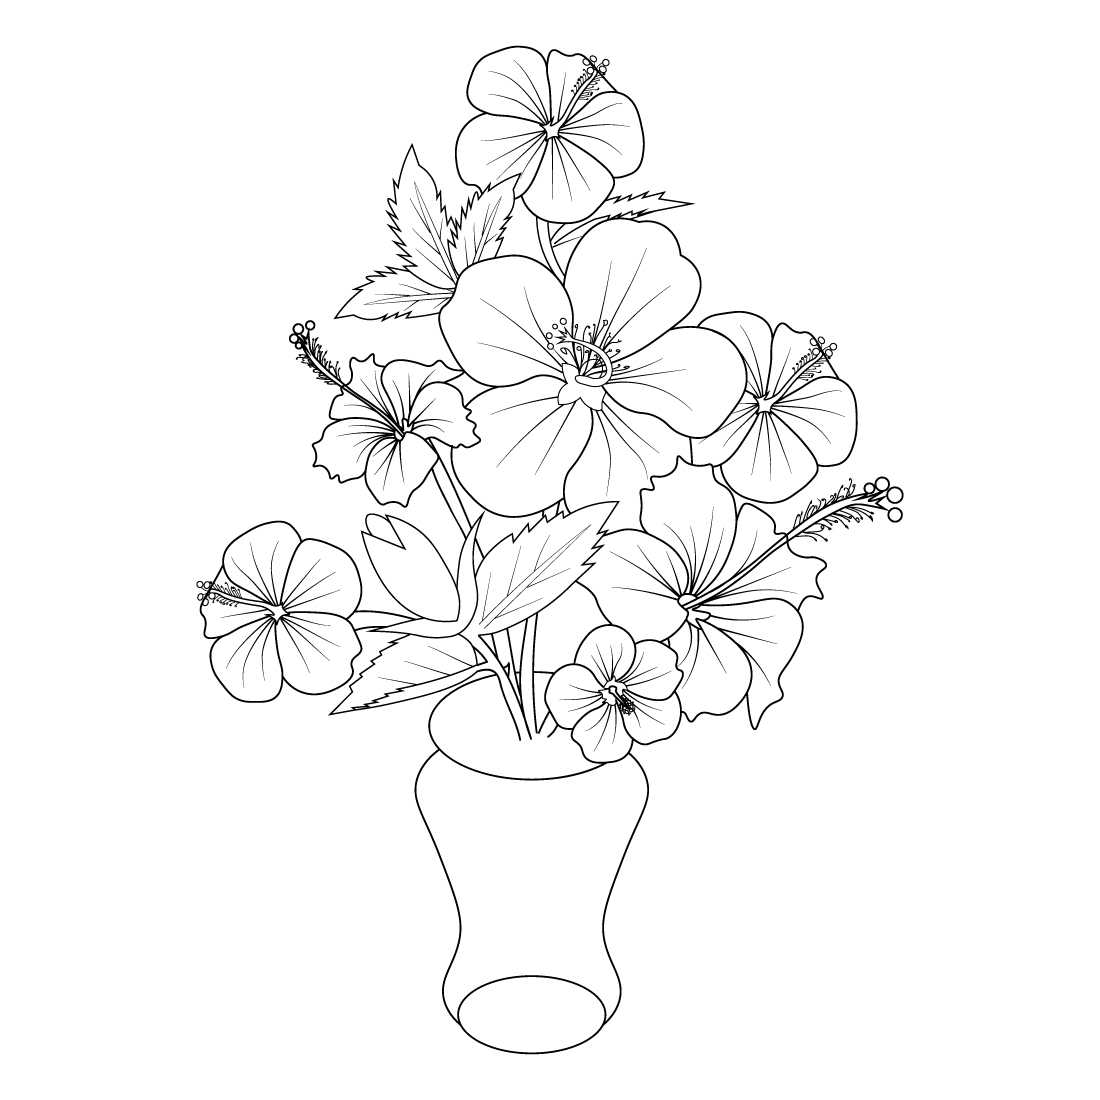 Premium Vector | Hand drawn sketch dahlia flower illustration